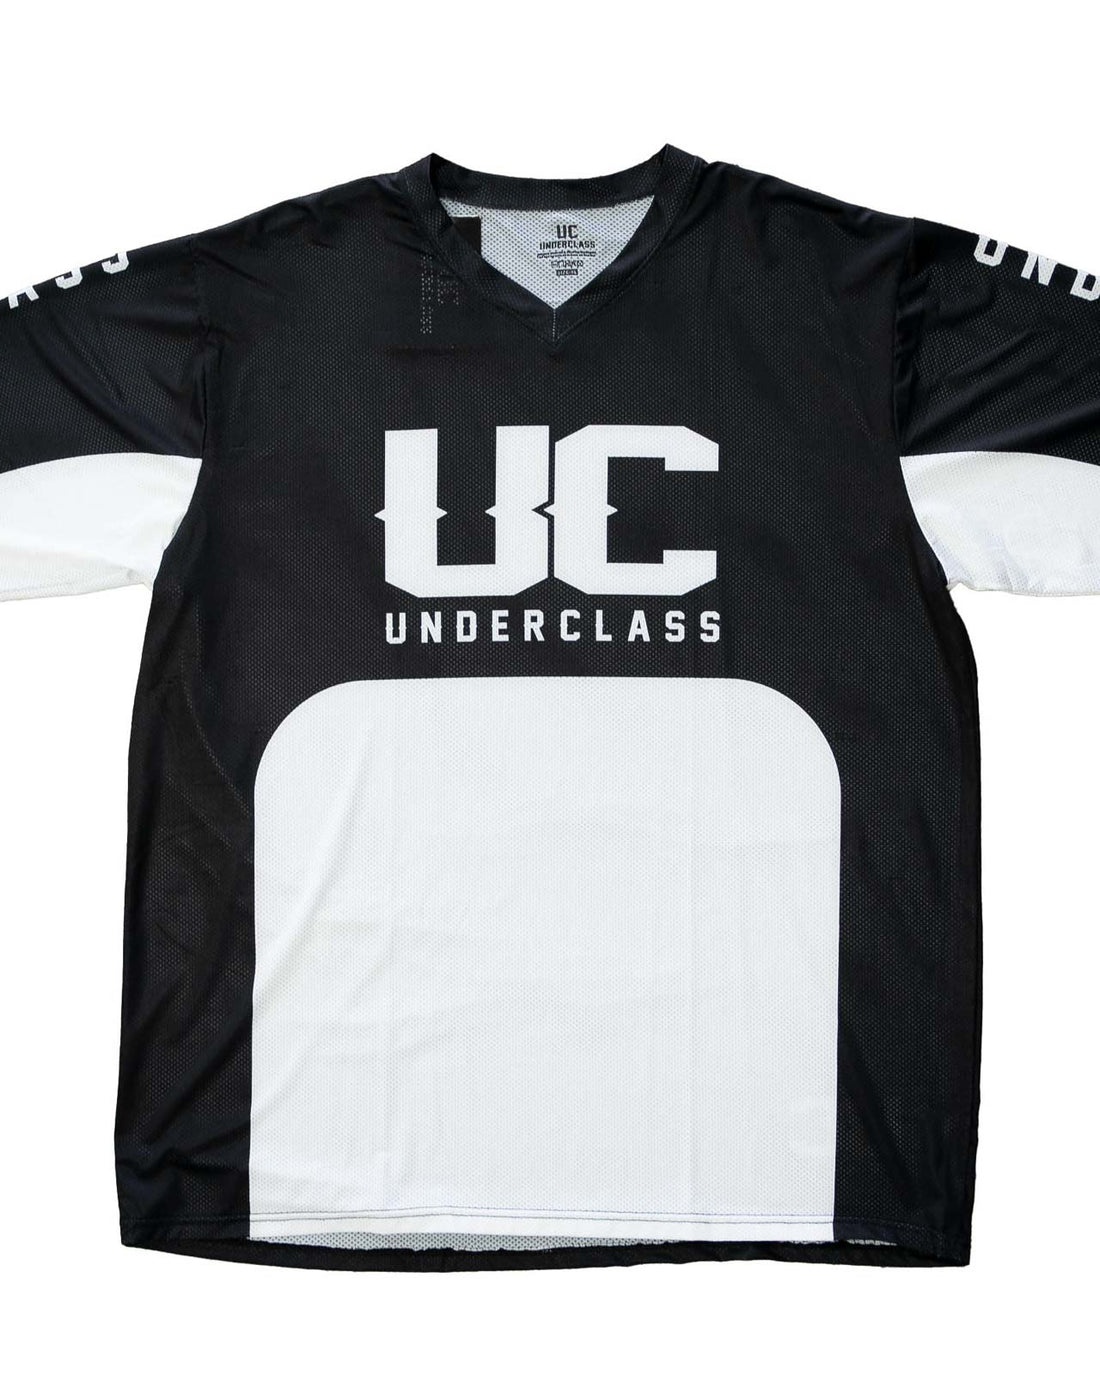 Underclass MX Air Jersey - Long Sleeve - Black / White